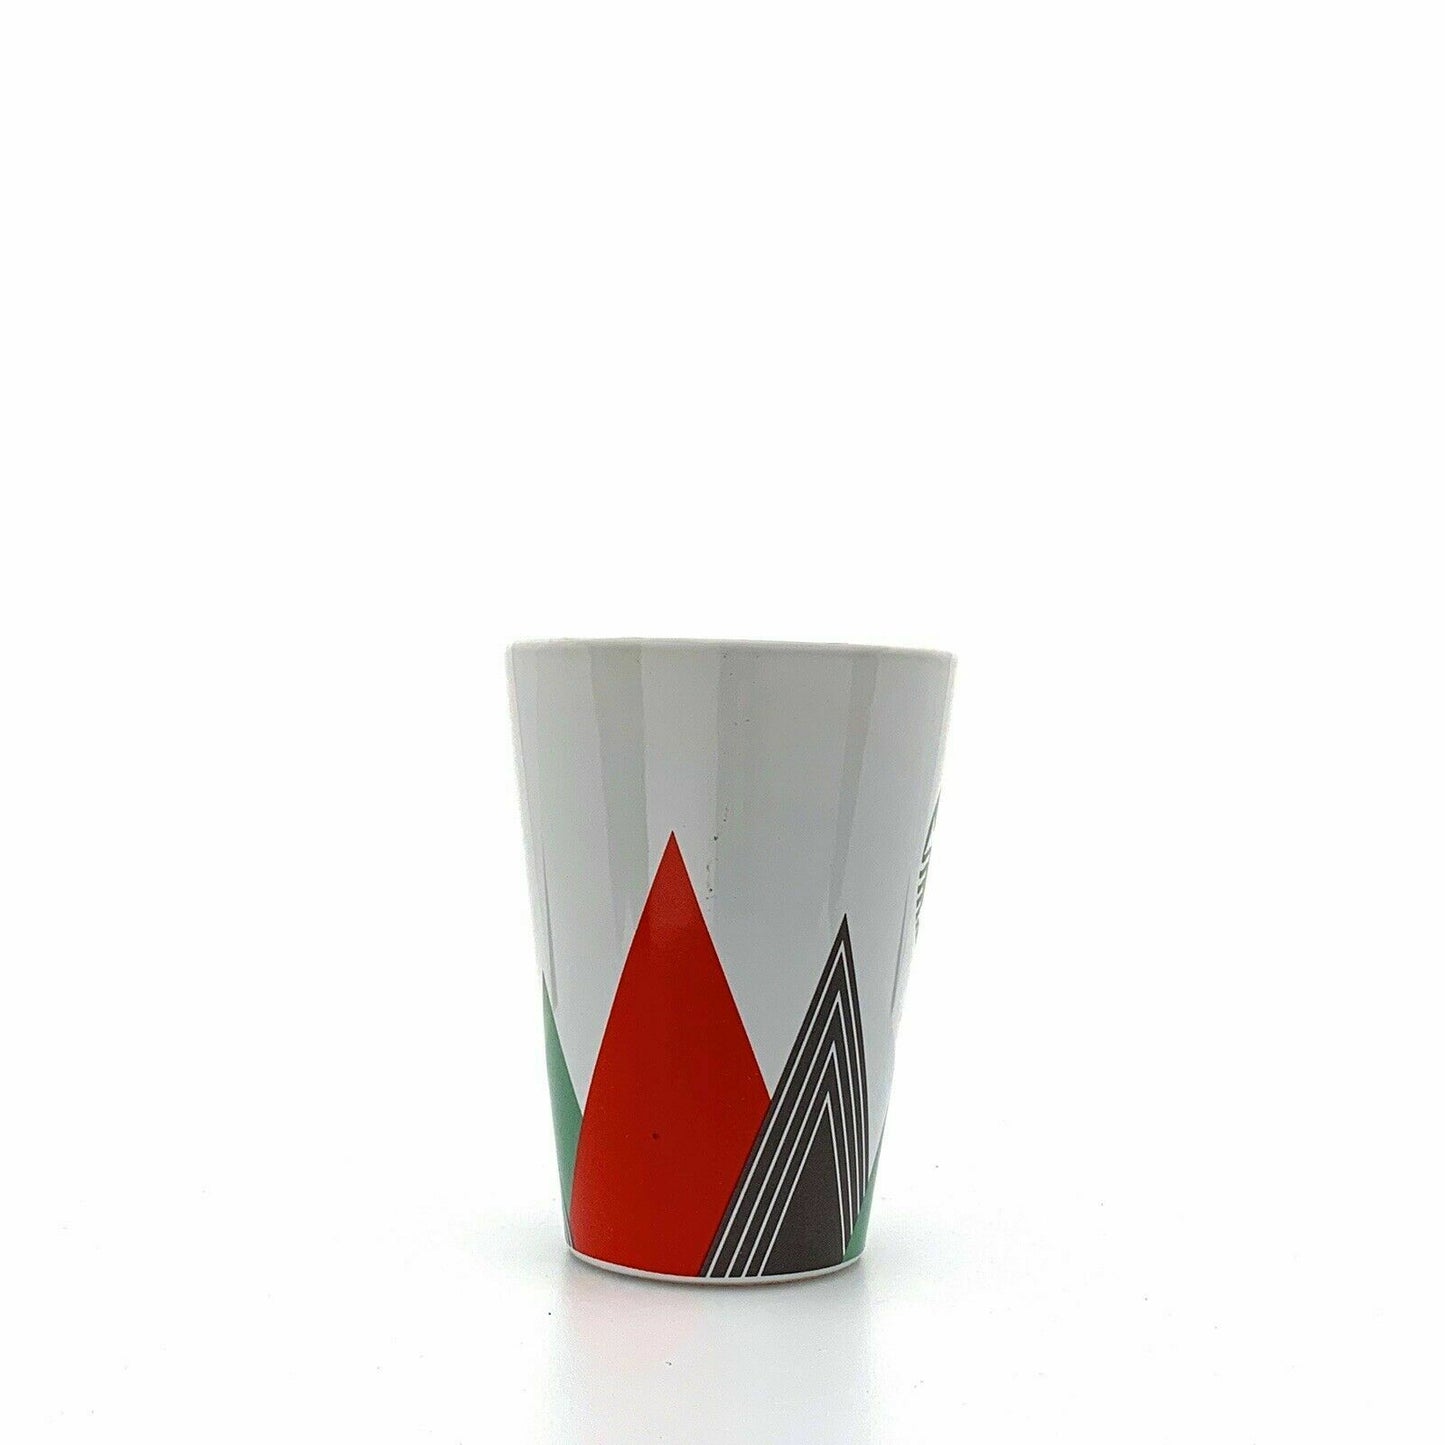 Starbucks Green Mermaid Logo Coffee Cup, White  - Red / Green Mountains - 16oz